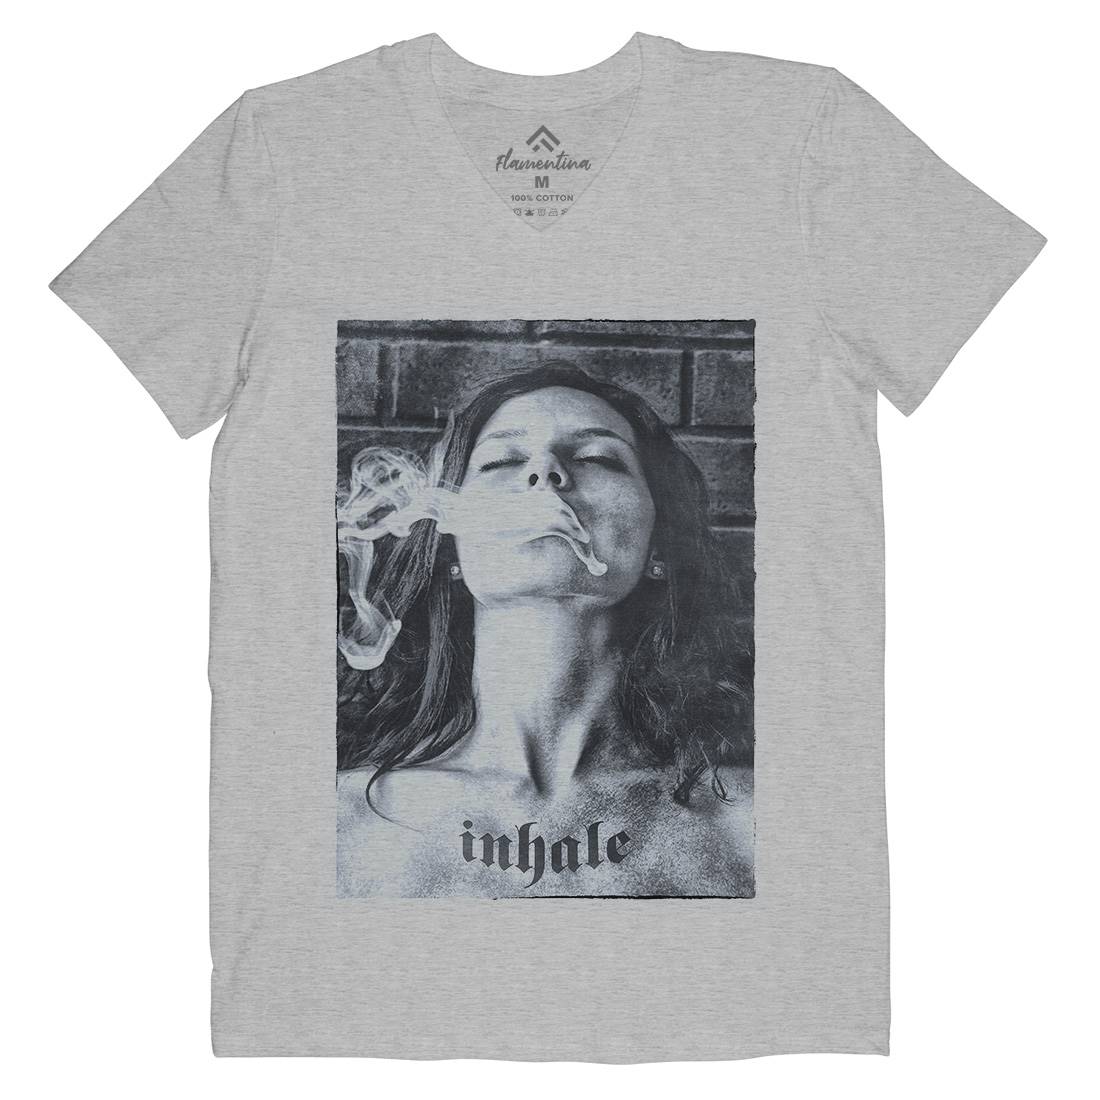 Inhale Mens V-Neck T-Shirt Drugs A851